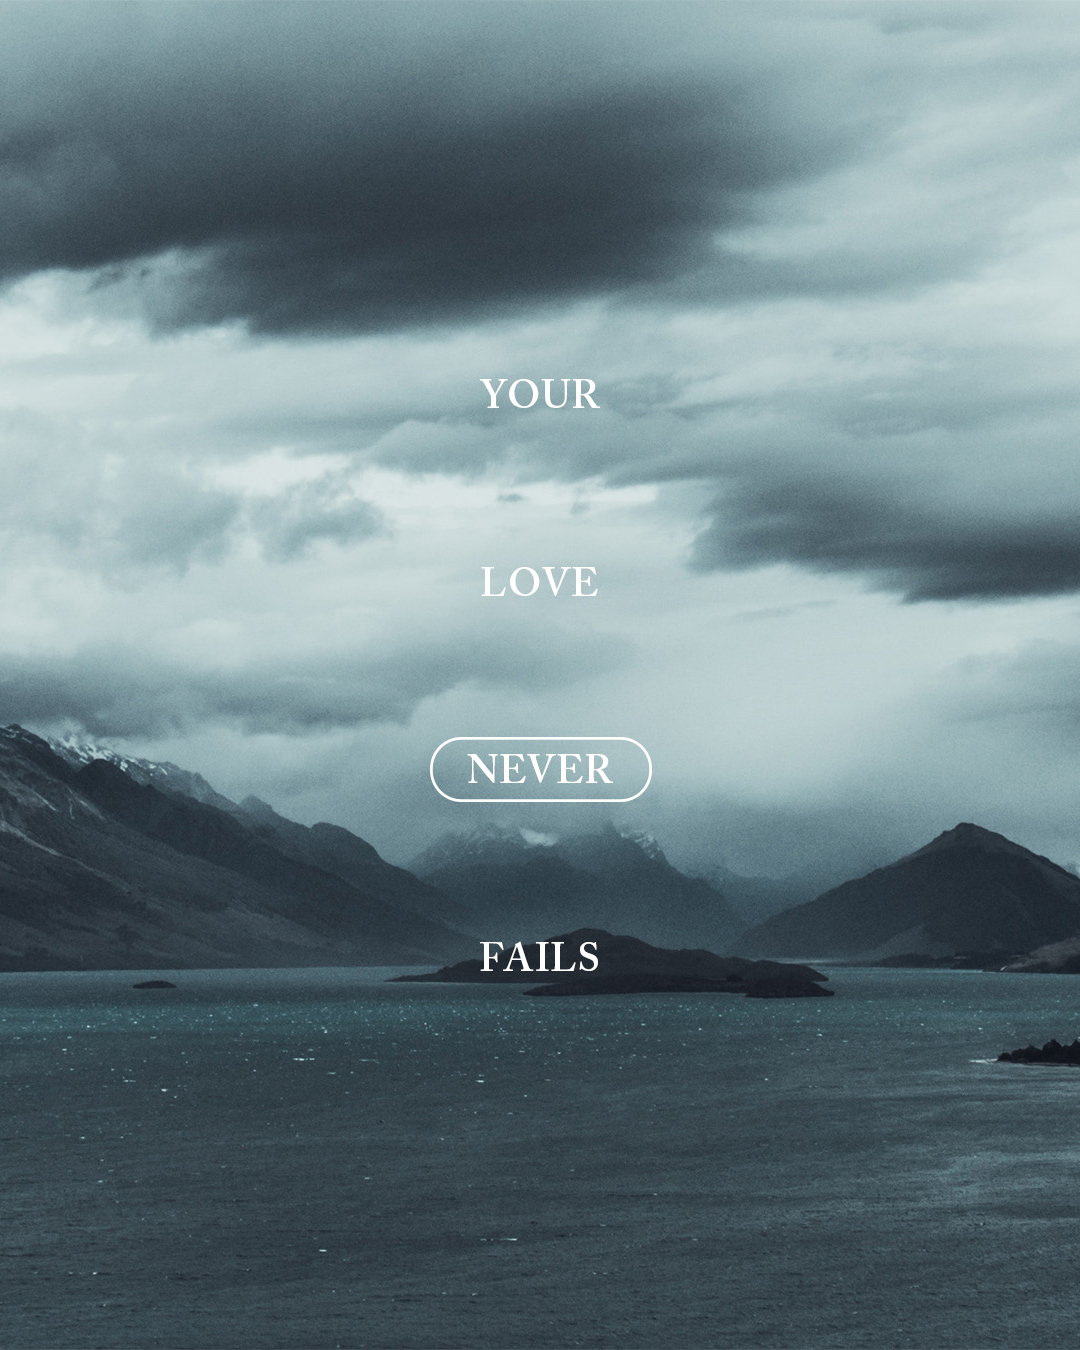 Your love never fails